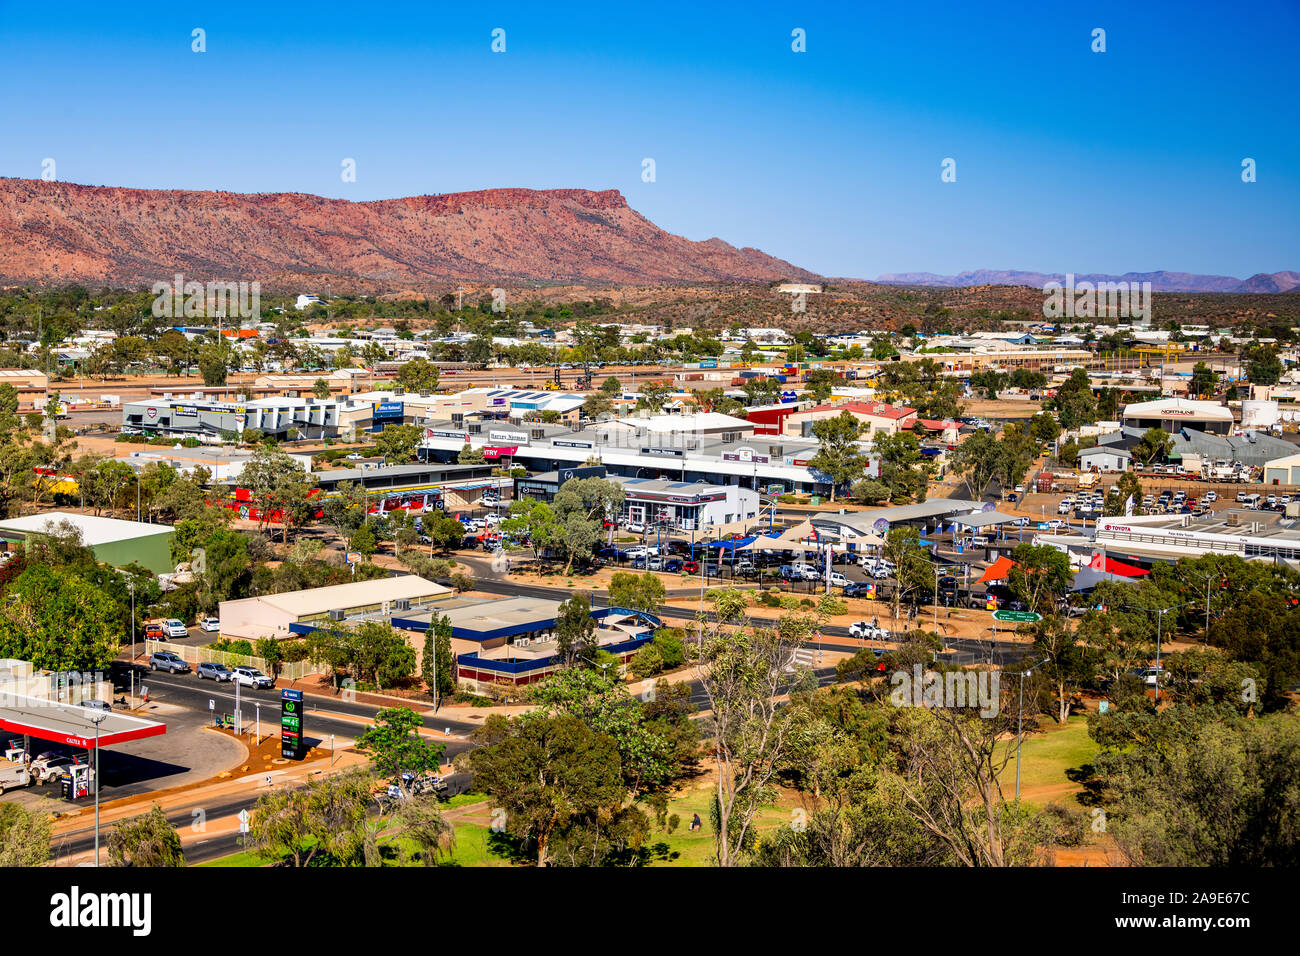 Der Blick auf Alice Springs vom ANZAC Hill.Alice Springs, Northern Territory, Australien. Stockfoto